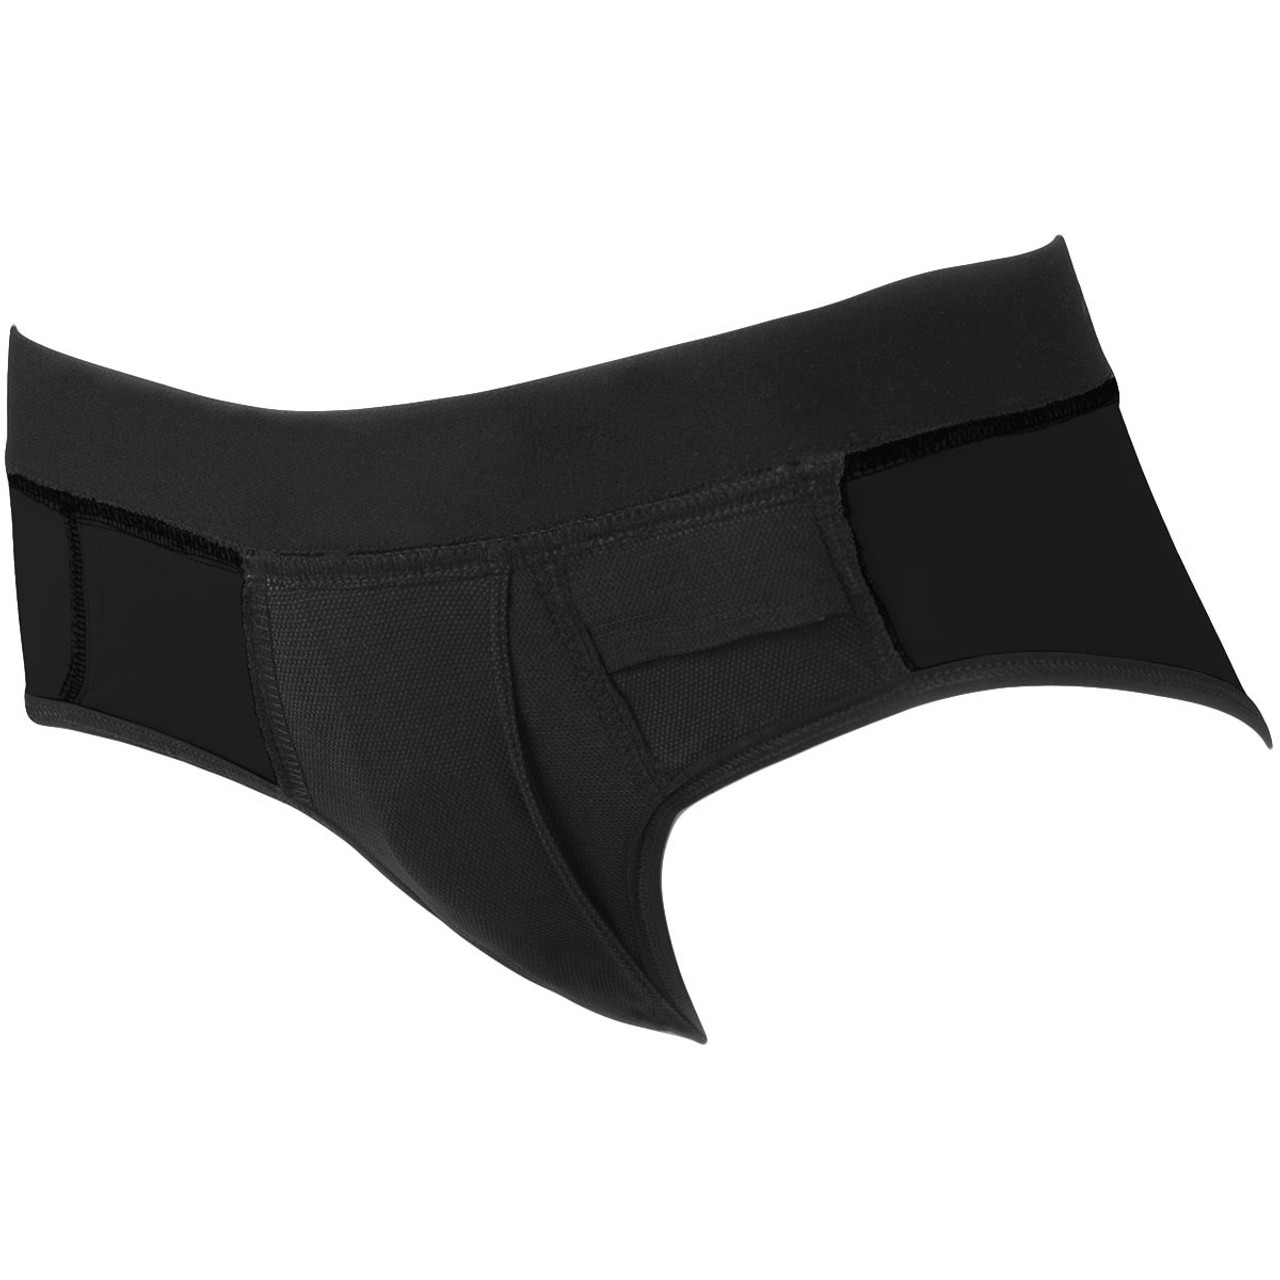 Harness Underwear for Strap On Underwears Strapless Panties for Men Women  Couples black